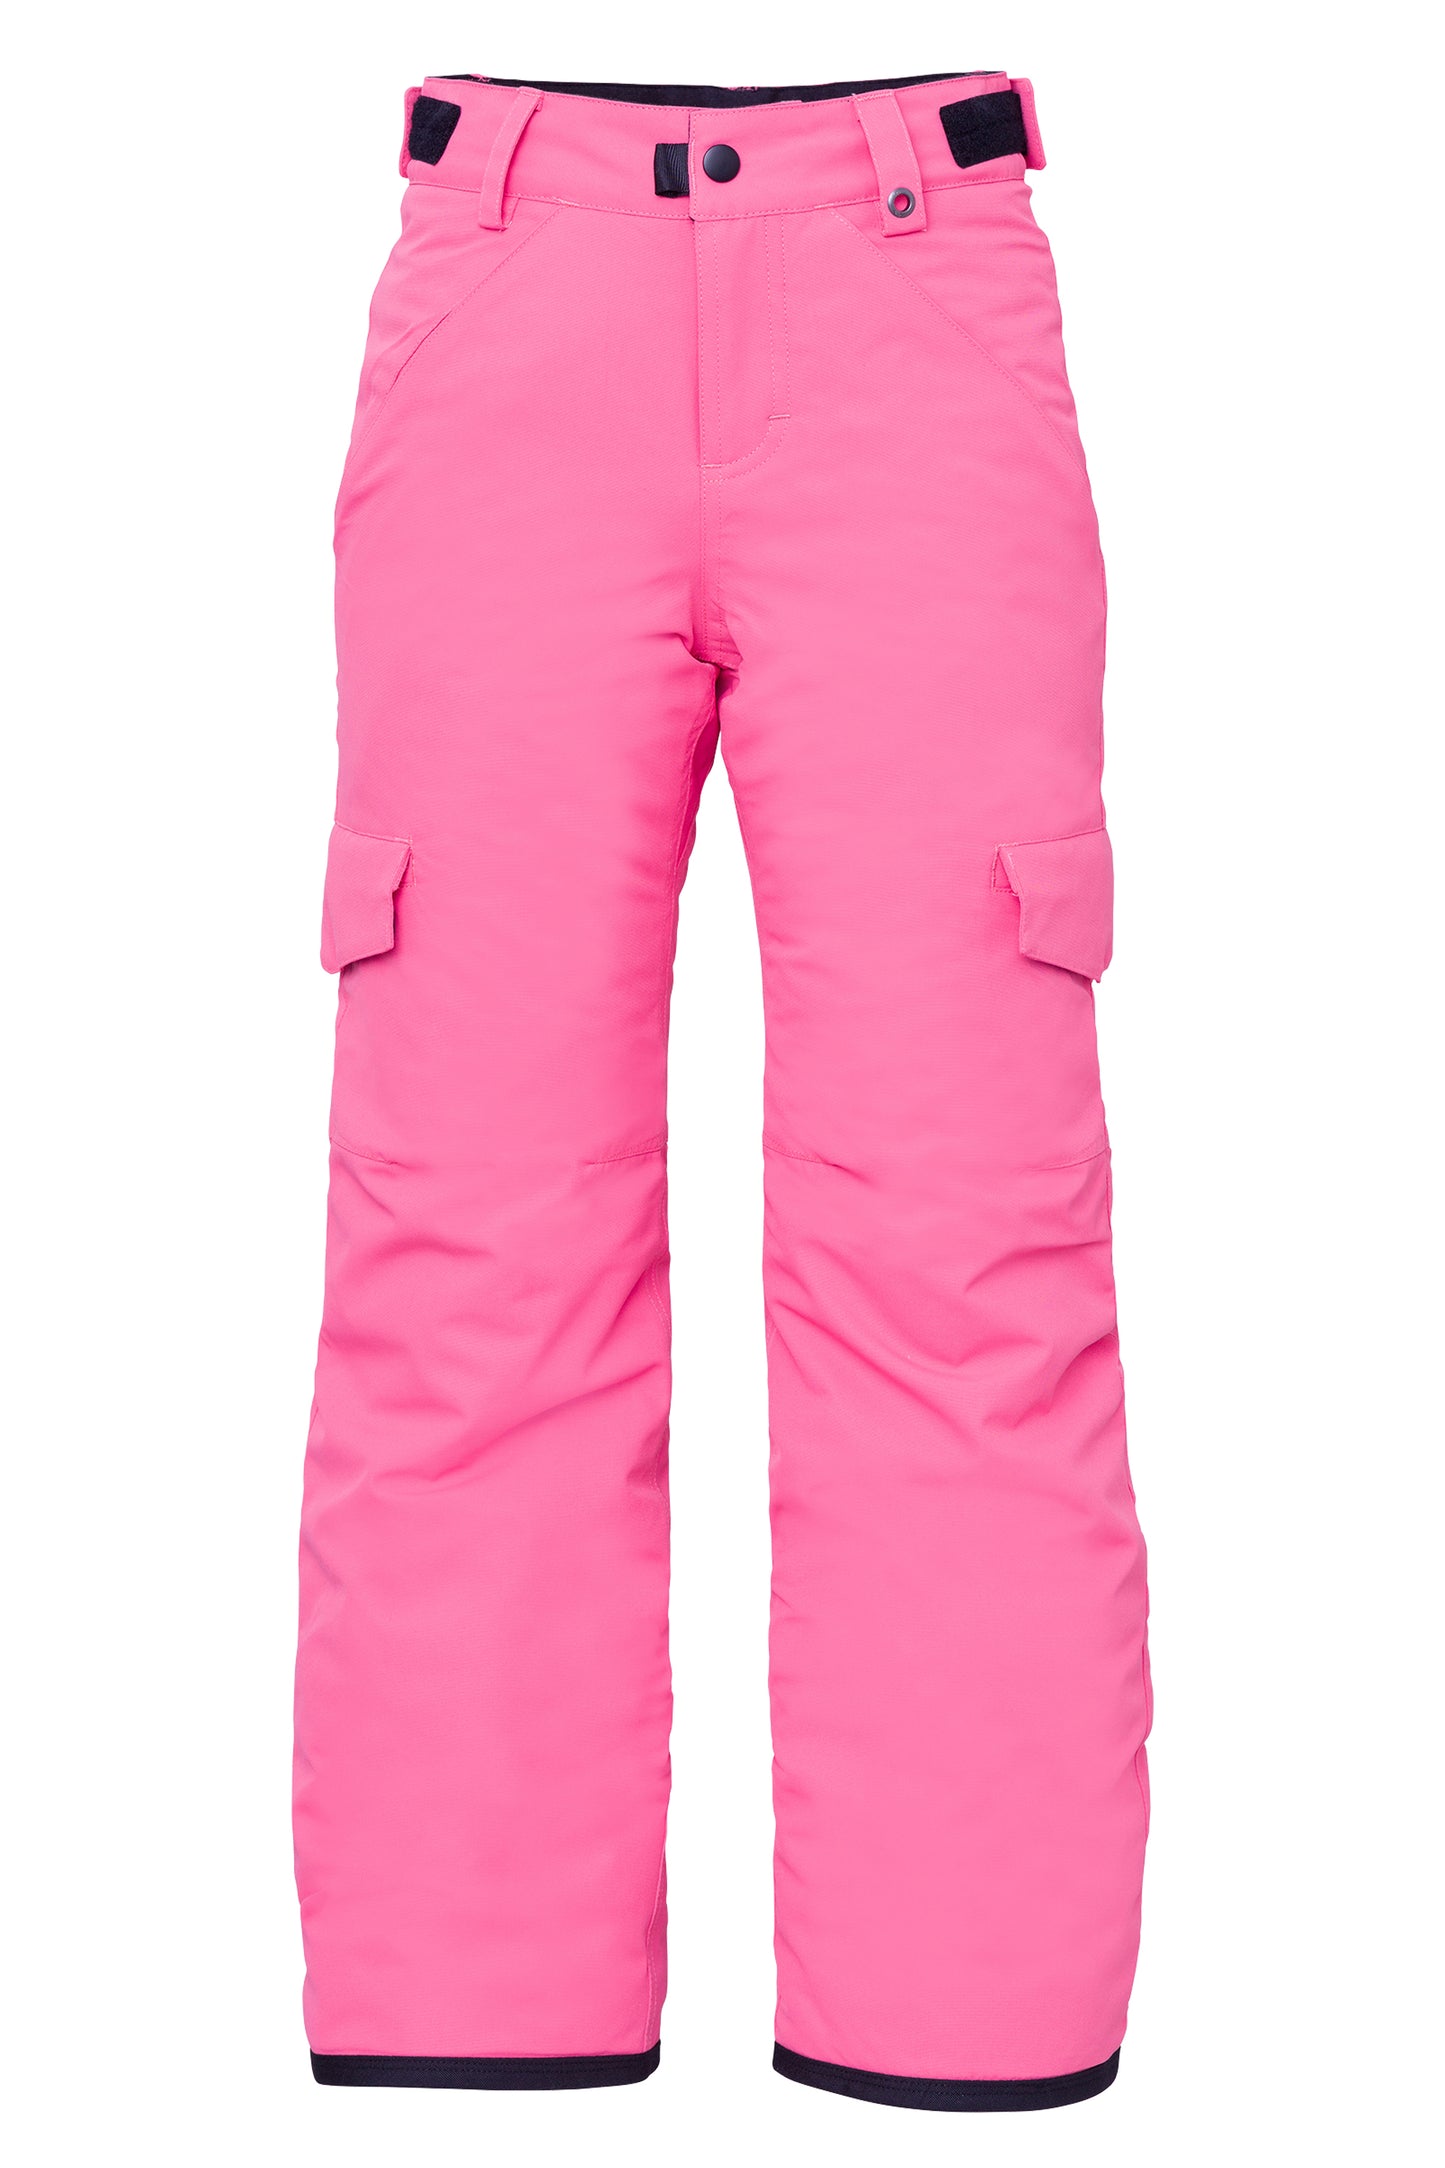 bright pink snow pants - girls'